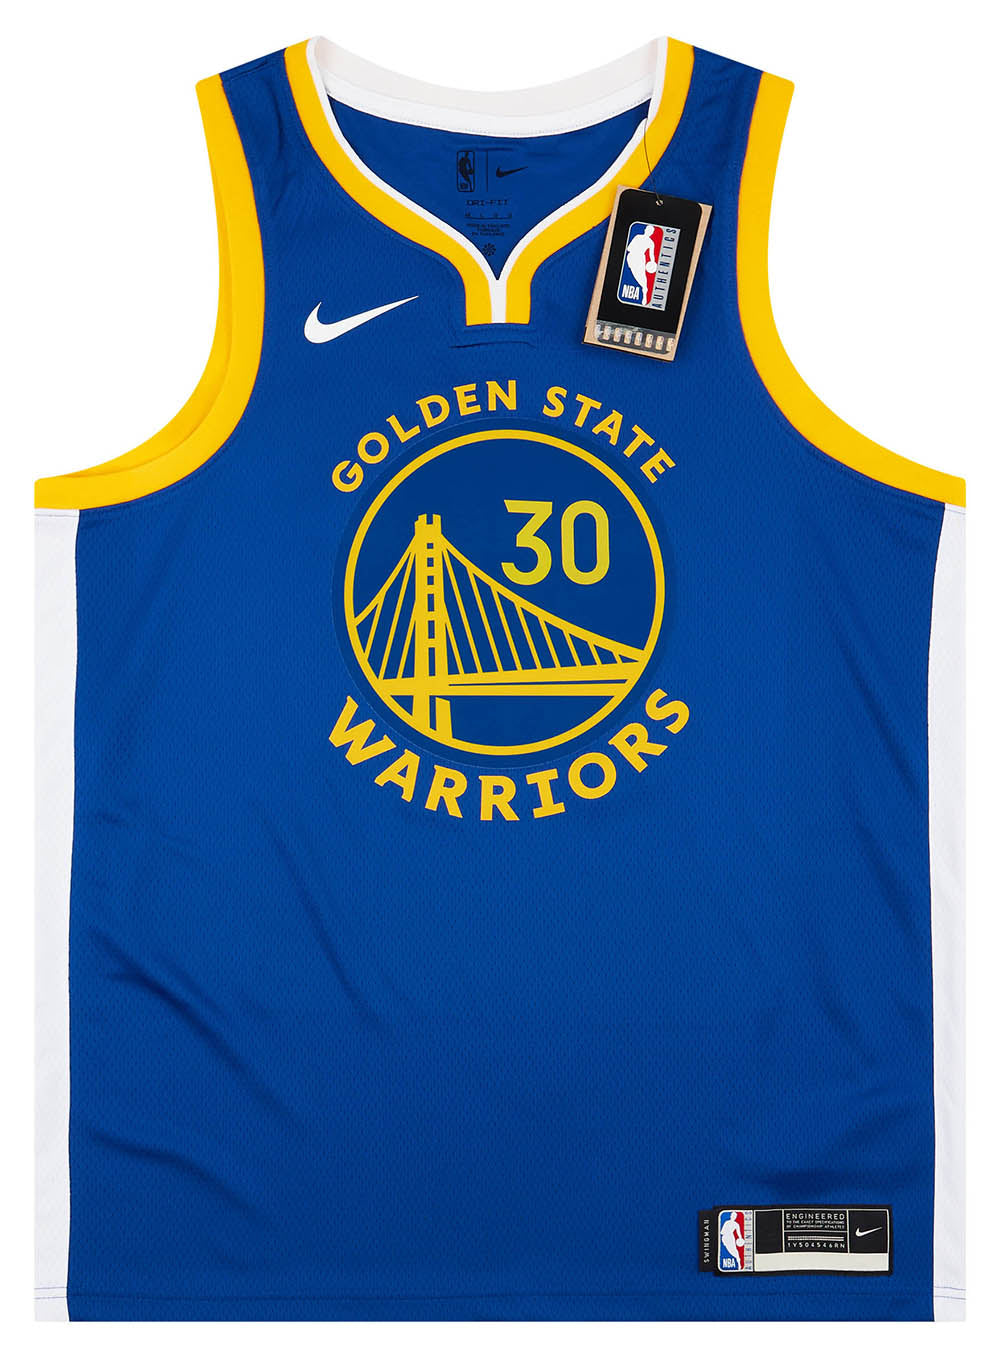 Nike NBA Golden State Warriors Hoodie Sweatshirt Blue Yellow Size